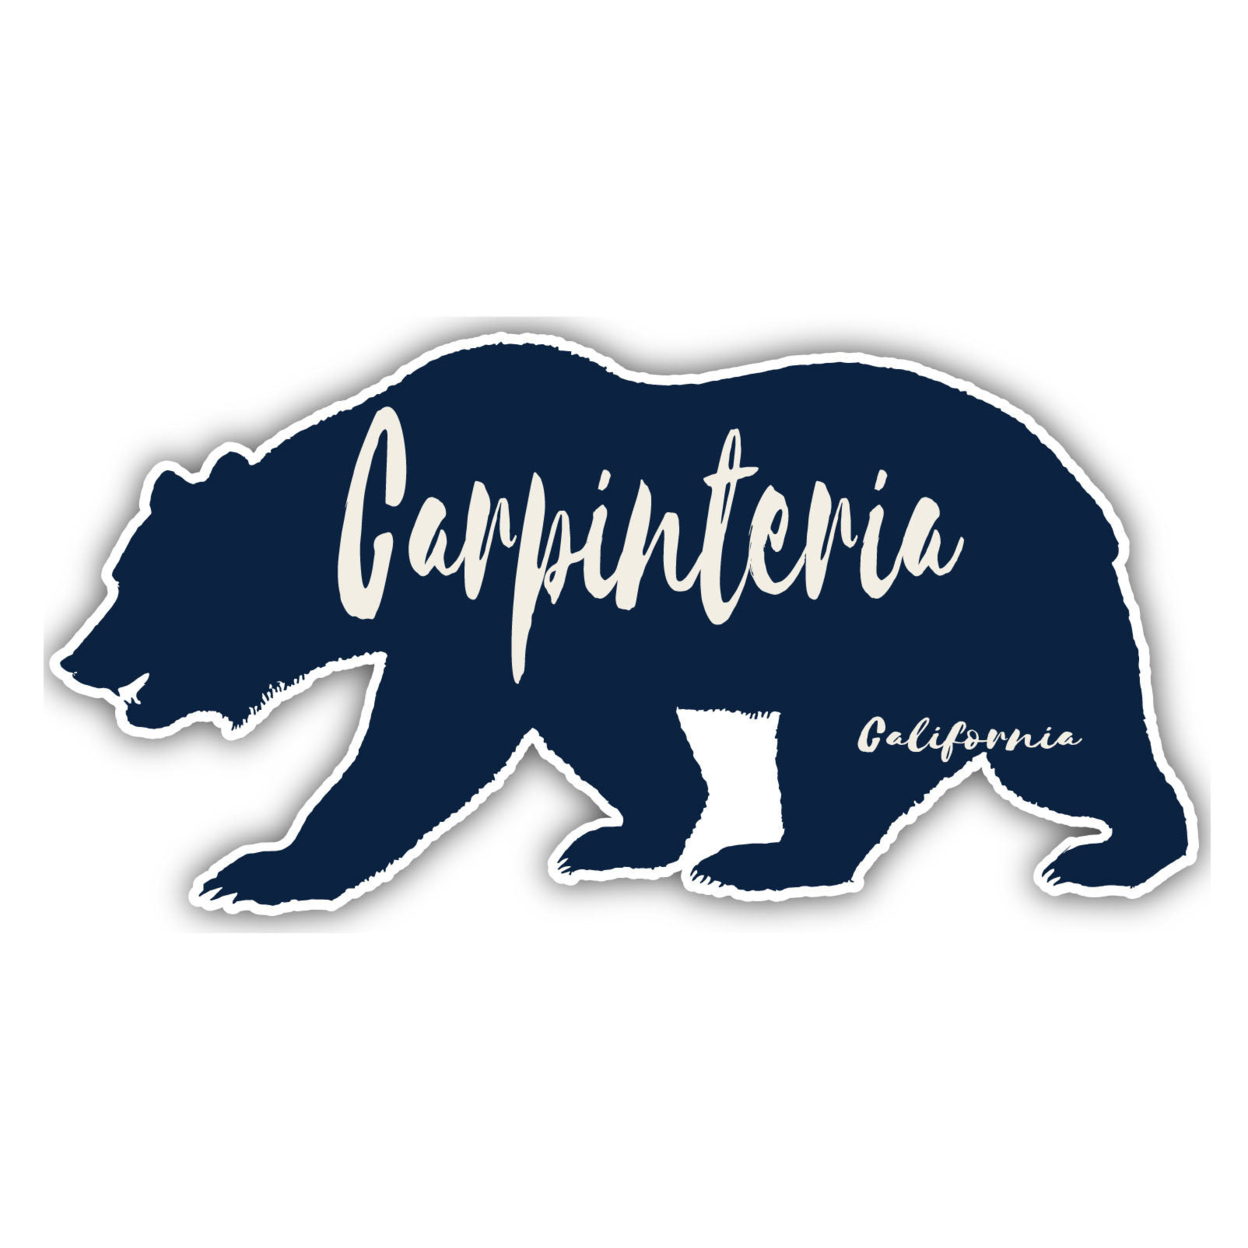 Carpinteria California Souvenir Decorative Stickers (Choose Theme And Size) - Single Unit, 8-Inch, Bear